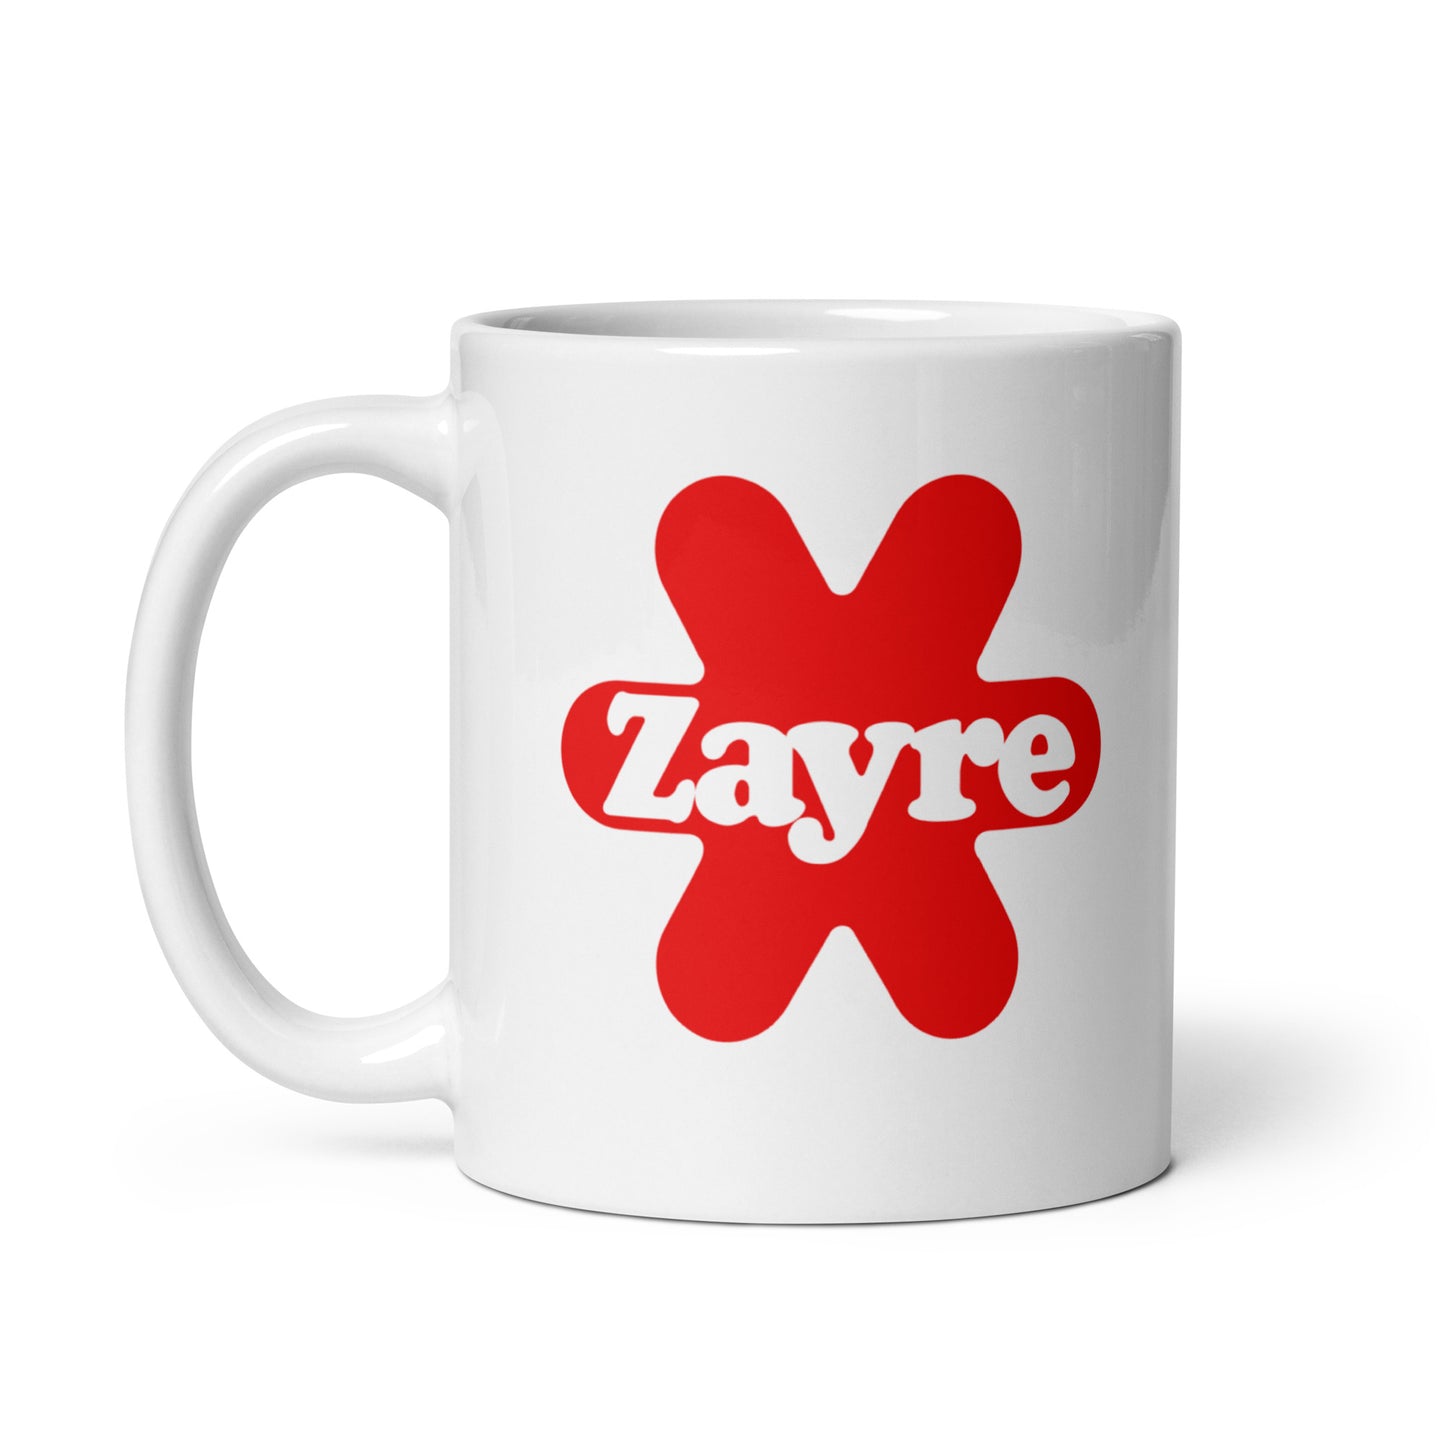 Zayre Coffee Mug